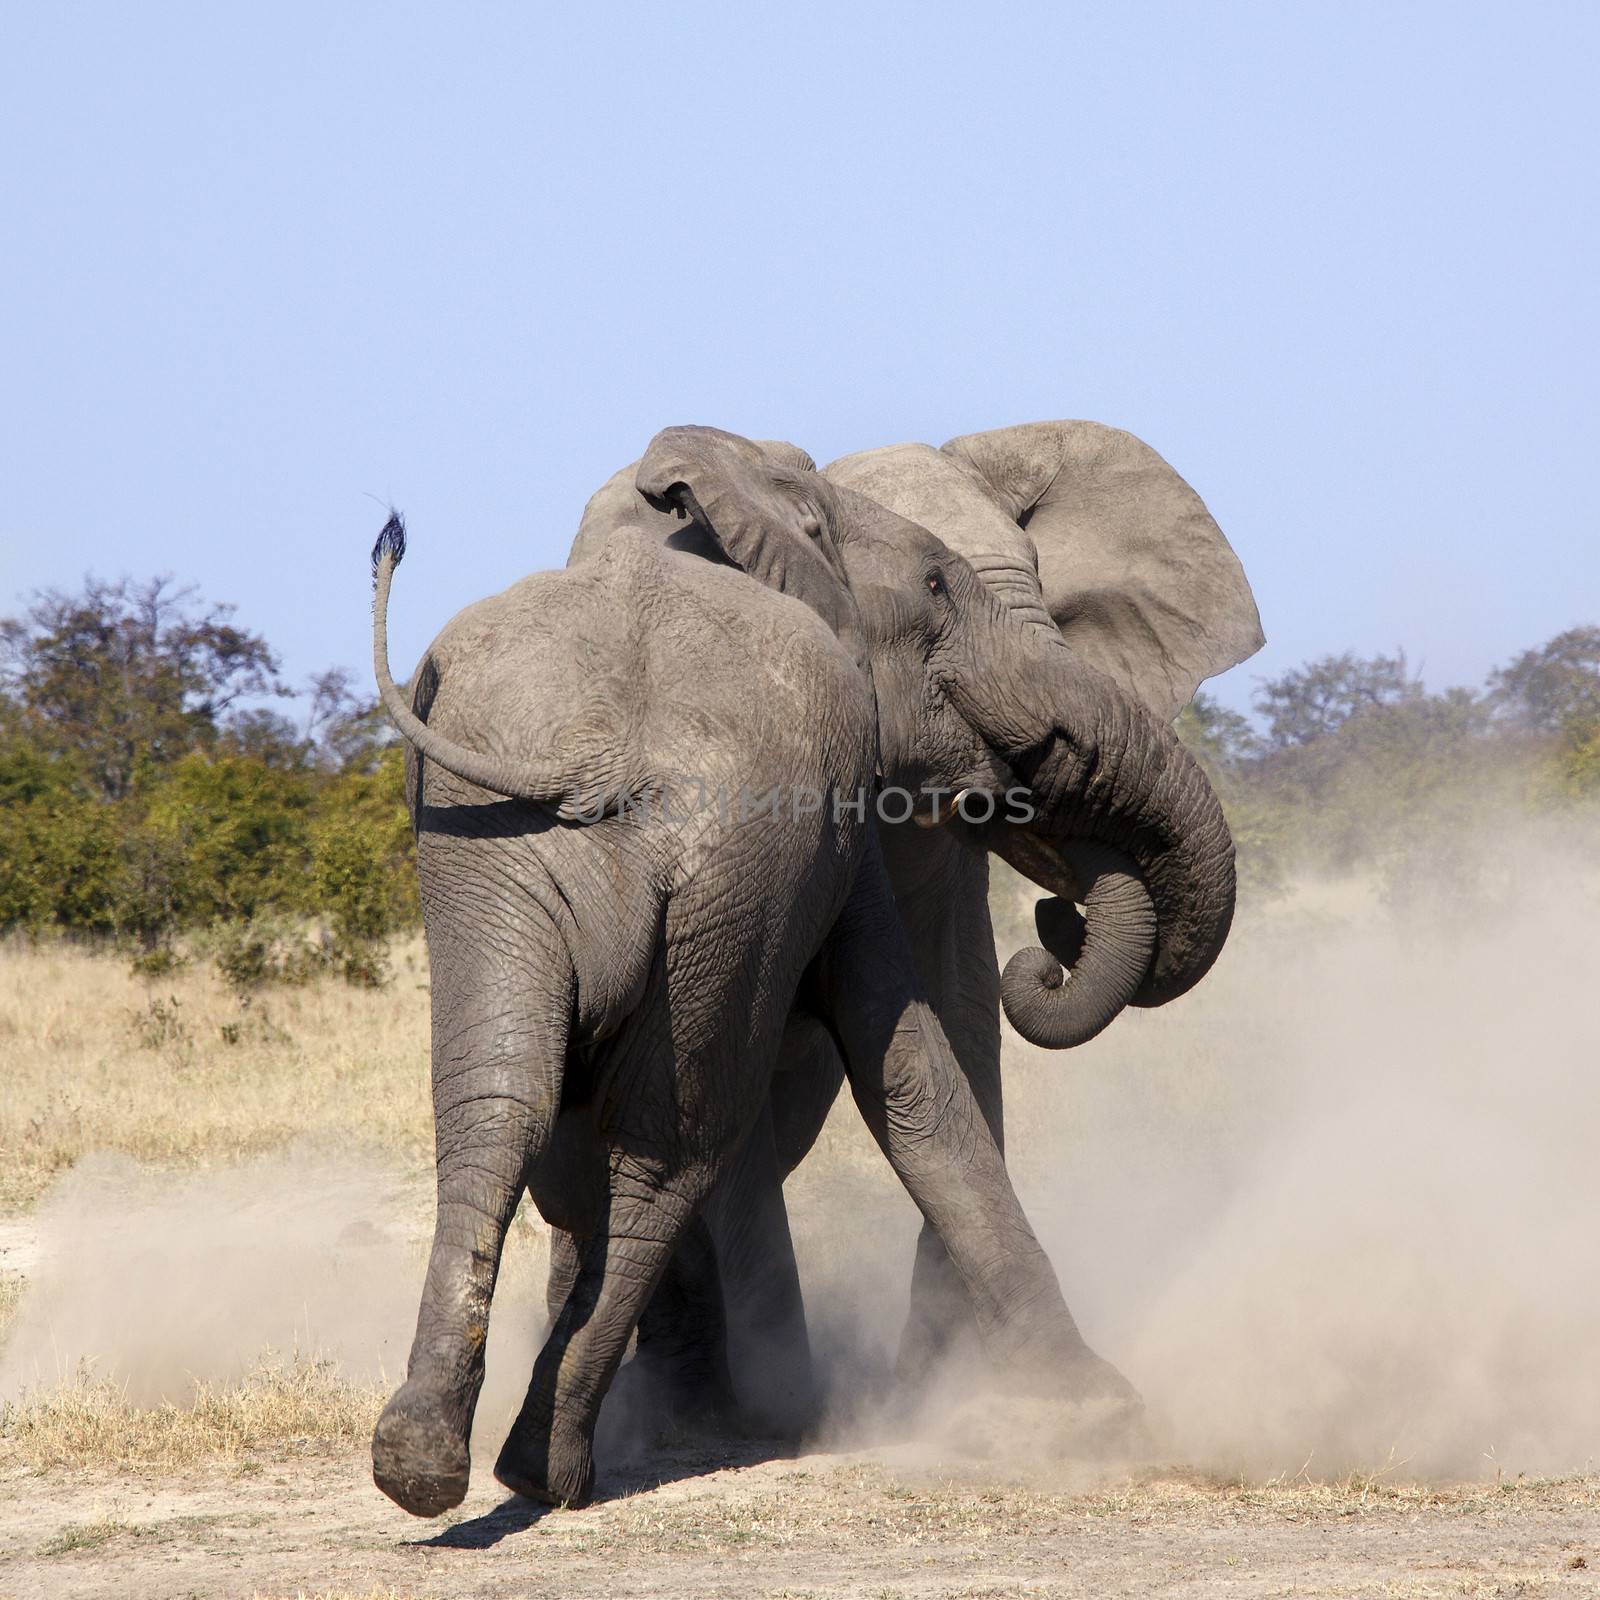 Two Elephants (Loxodonta africana) fighting in the Savuti region of Botswana in Southern Africa